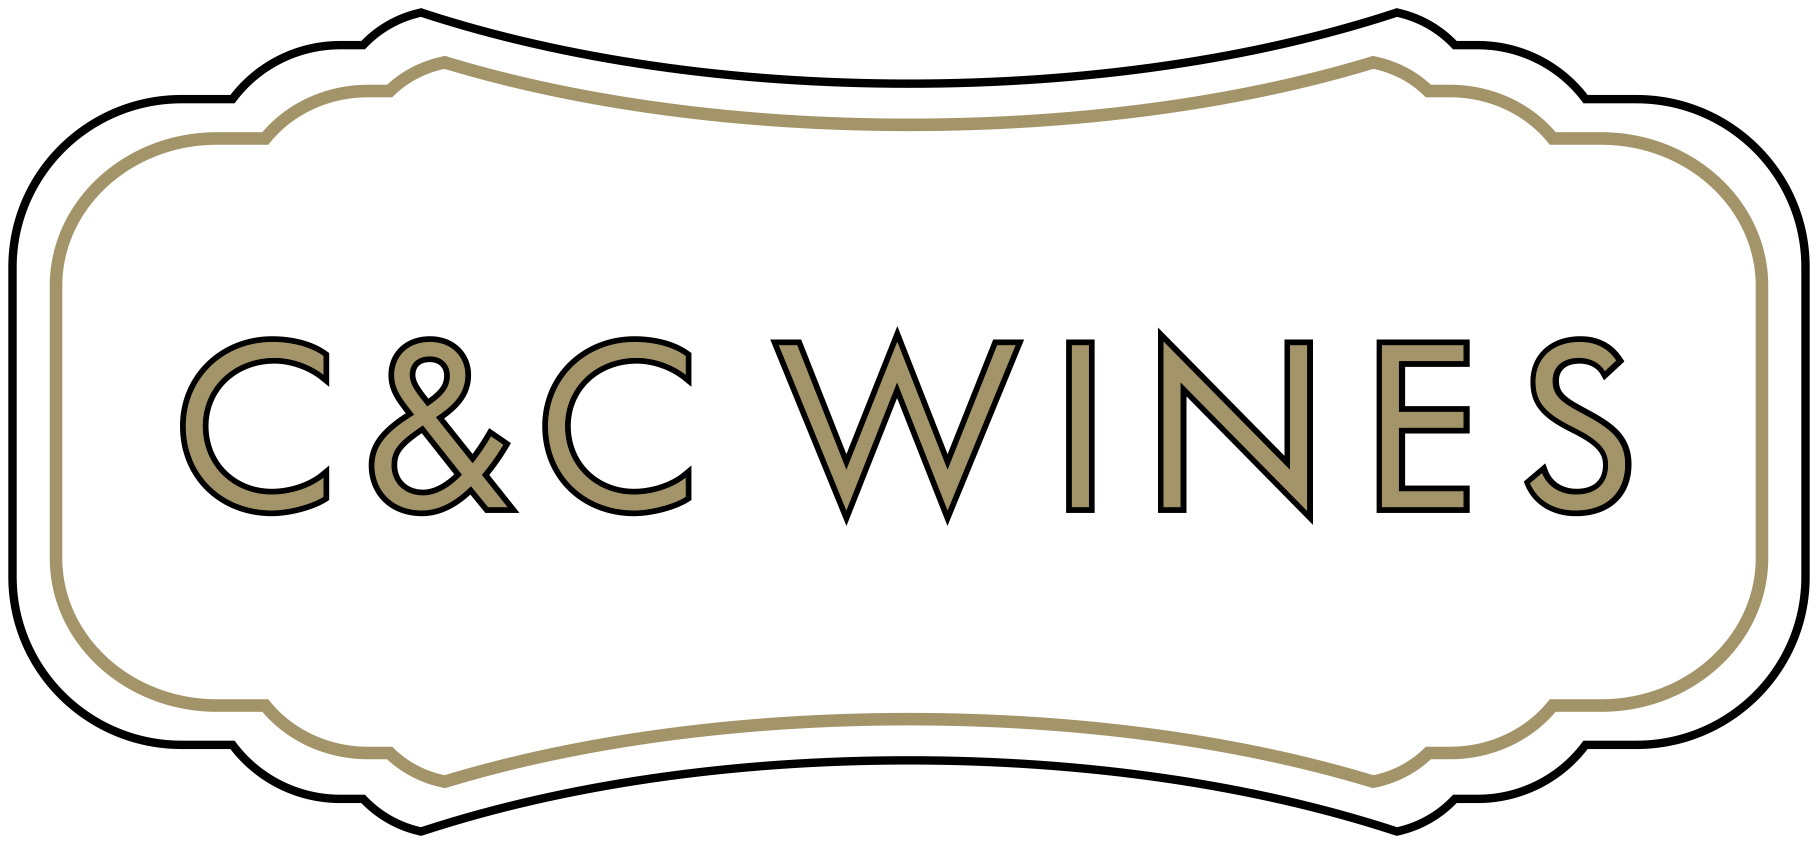 CC Wines_Logo_1_RGB.jpg